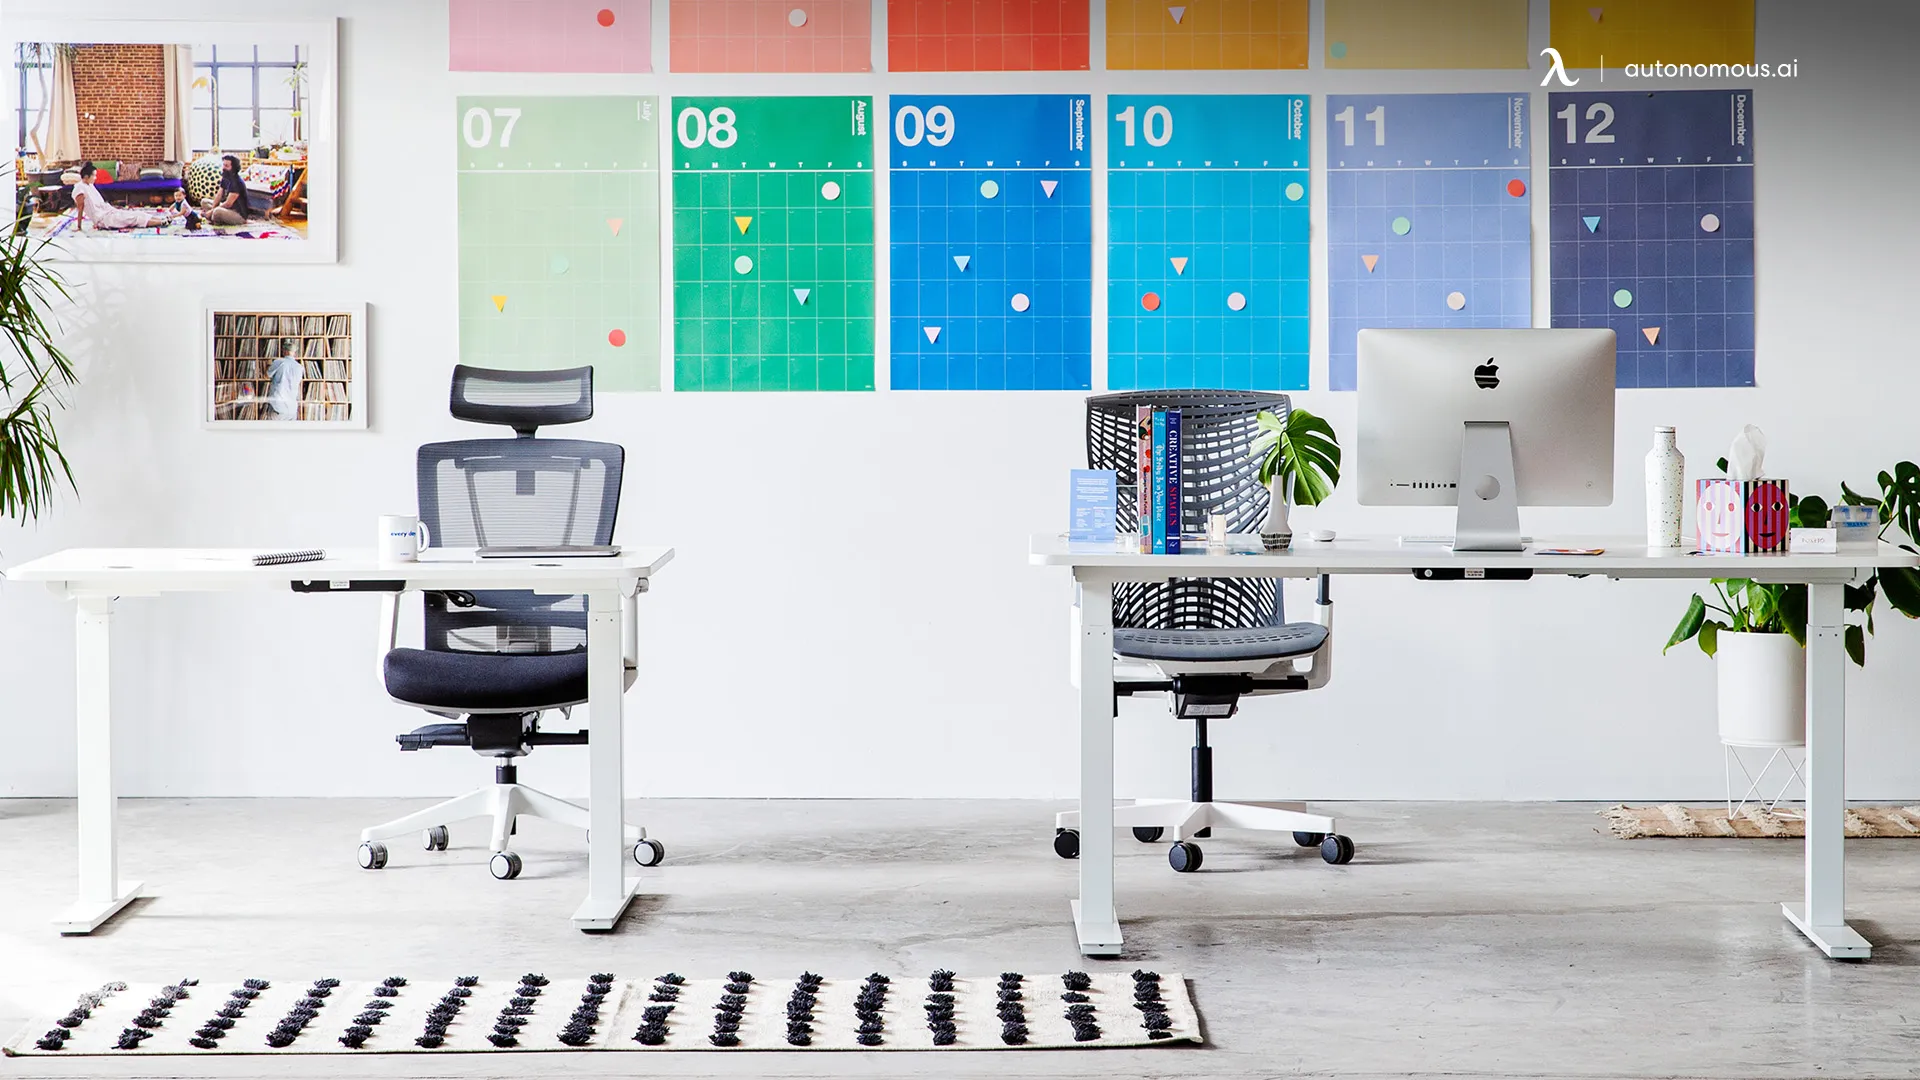 Autonomous Office Furniture